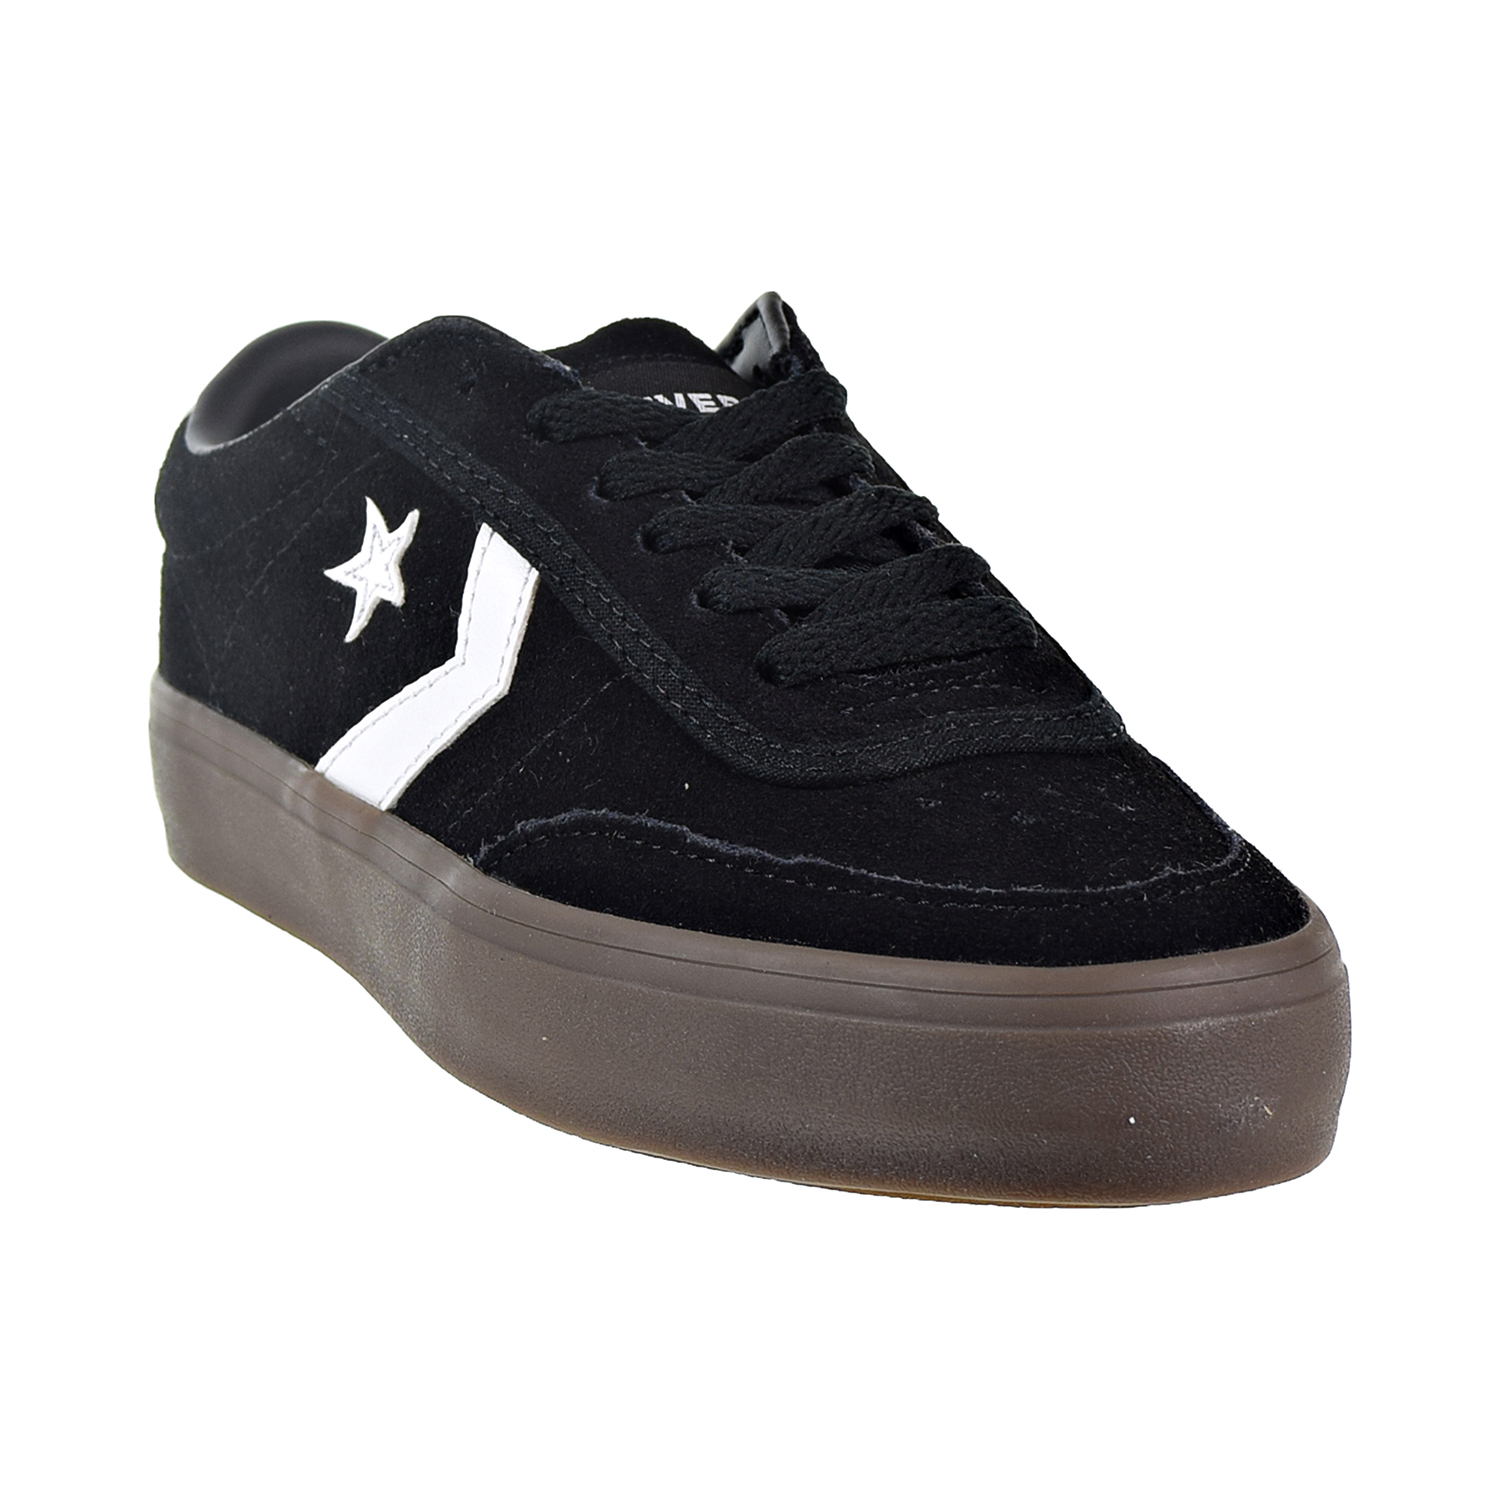 Converse Courtlandt OX Big Kids'/Men's Shoes Black-White-Brown 162570c - image 2 of 6